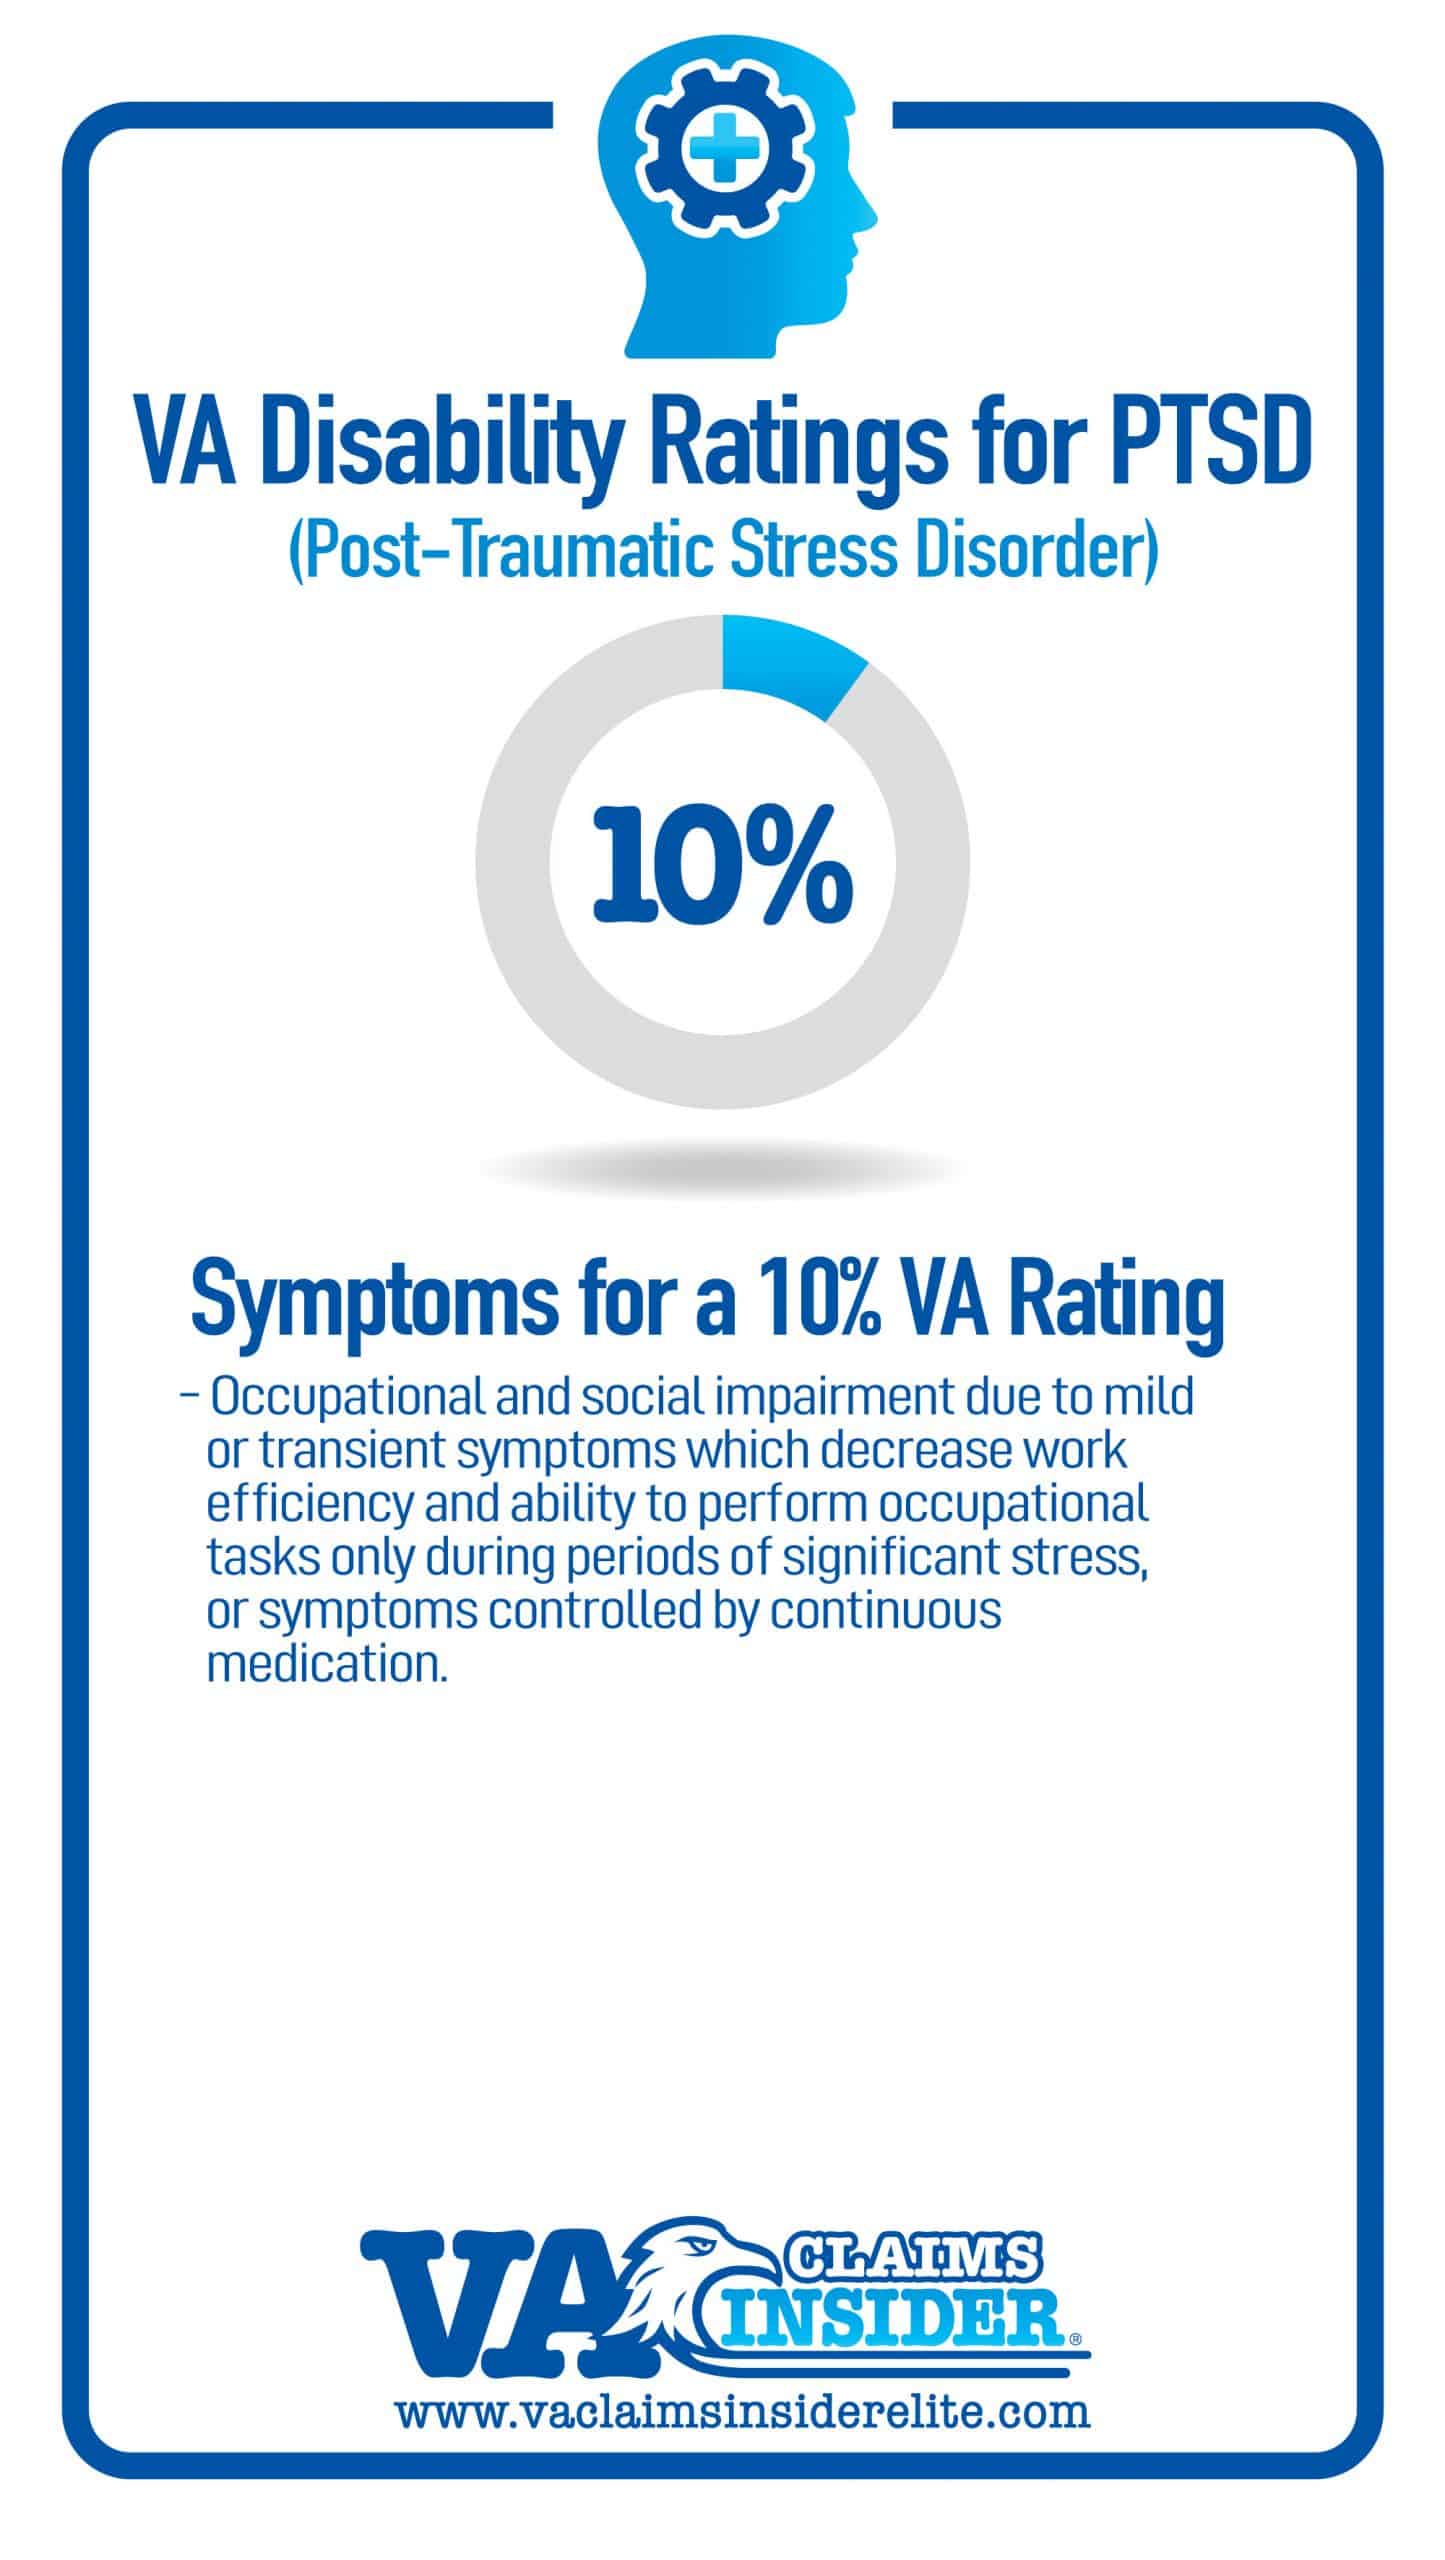 Symptoms of 10 Percent VA Rating for PTSD